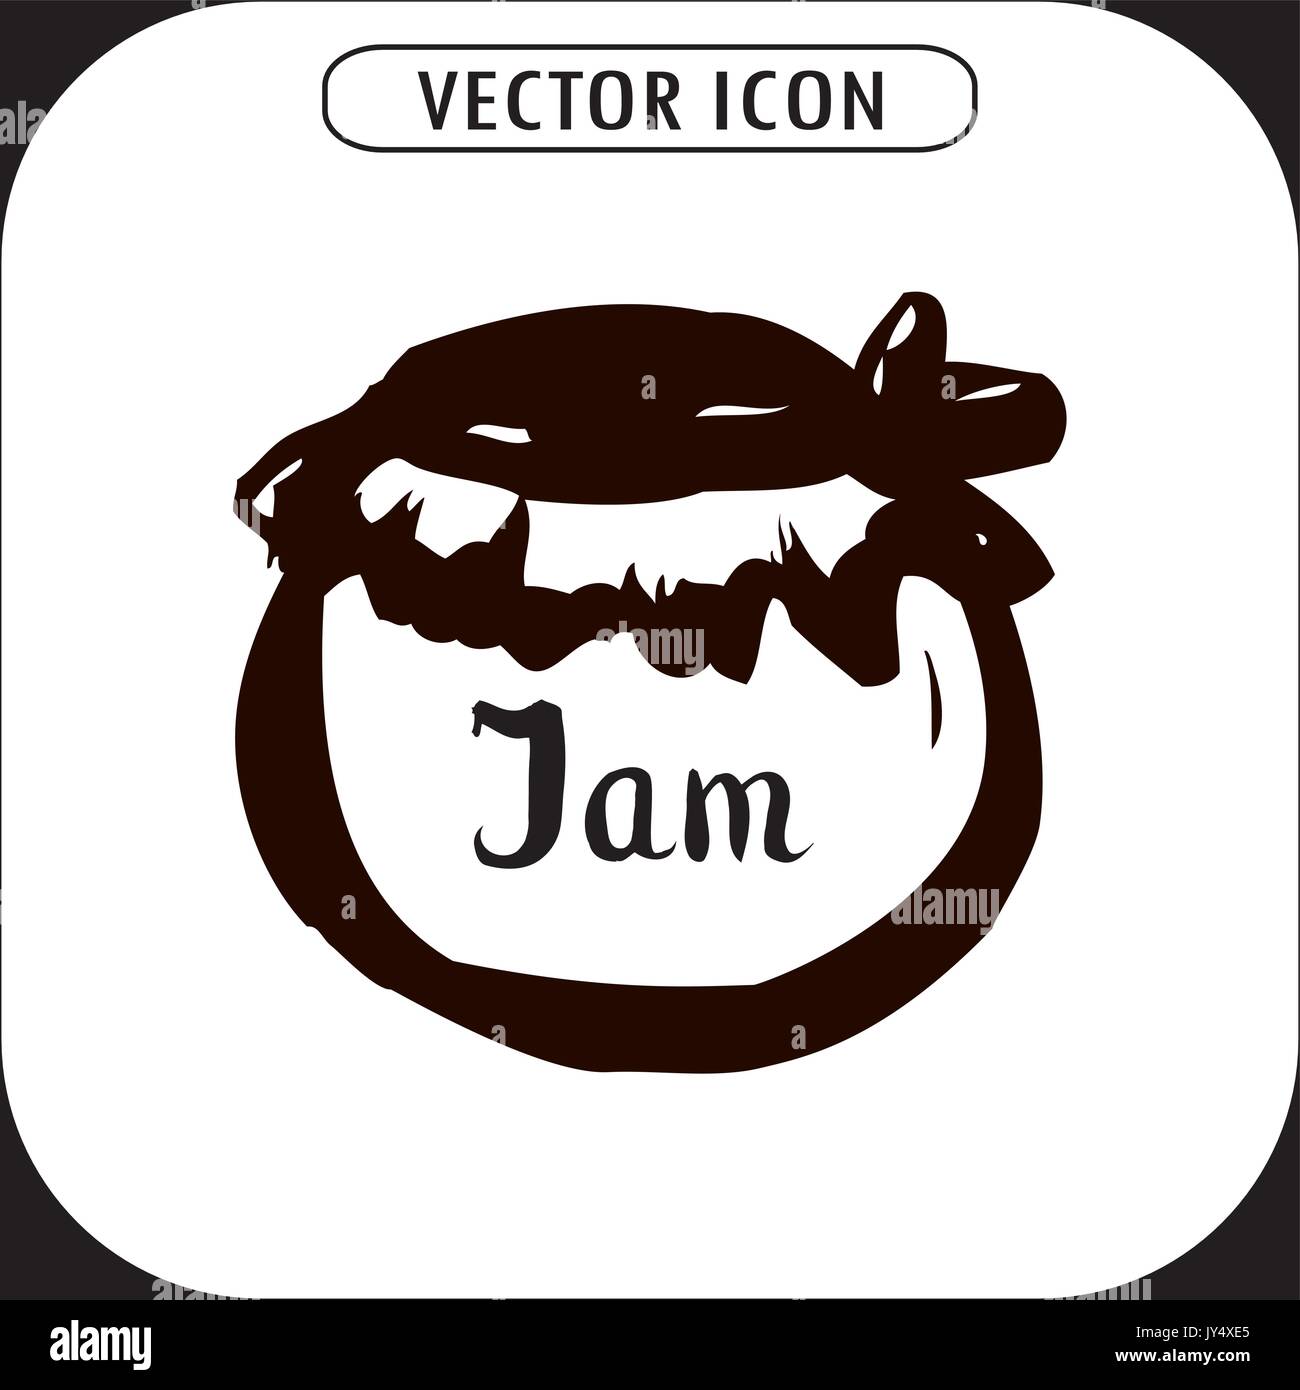 Bank jam icon. hand drawing, vector illustration Stock Vector